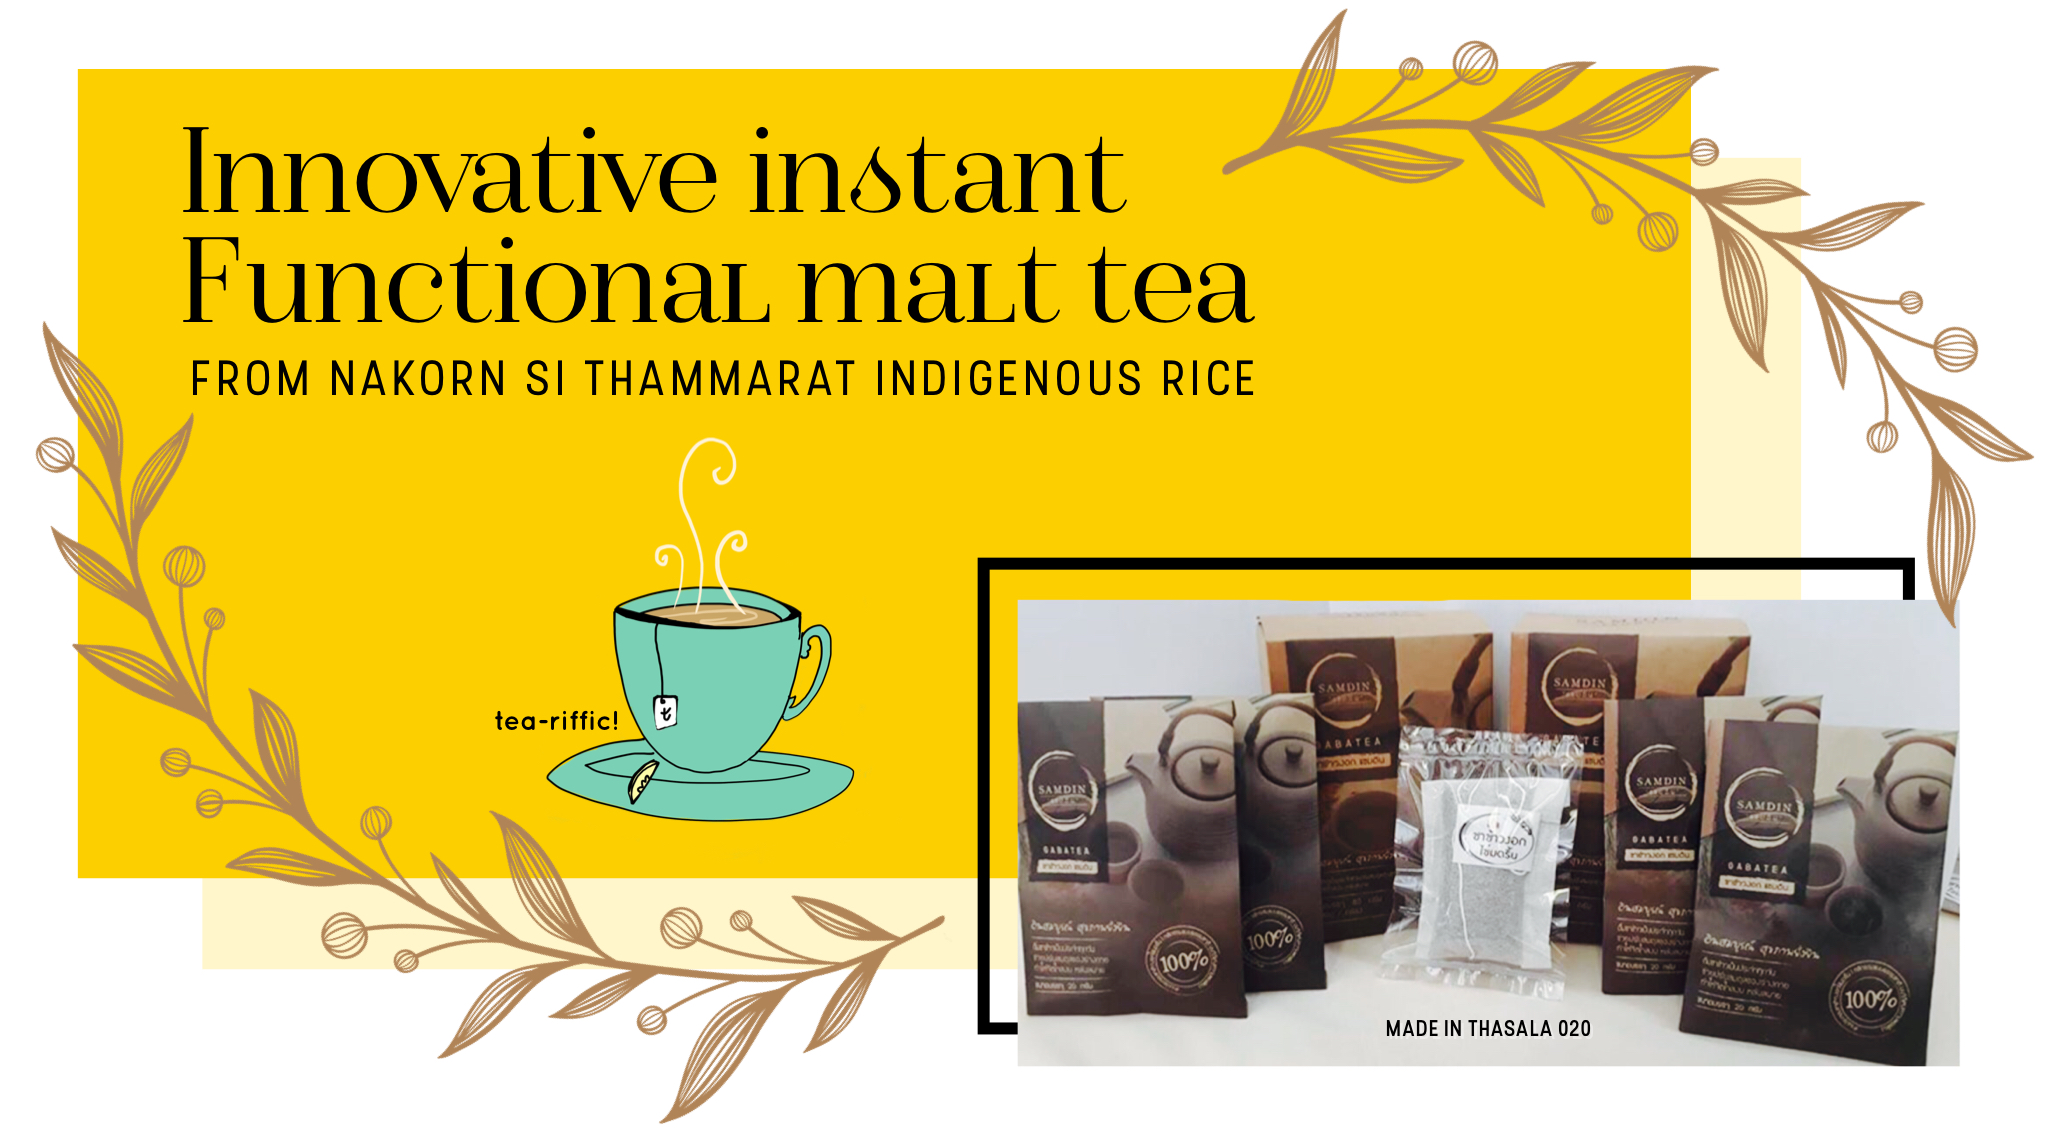 Innovative instant functional malt tea – convenience functional malt tea from Nakhon Si Thammarat local rice